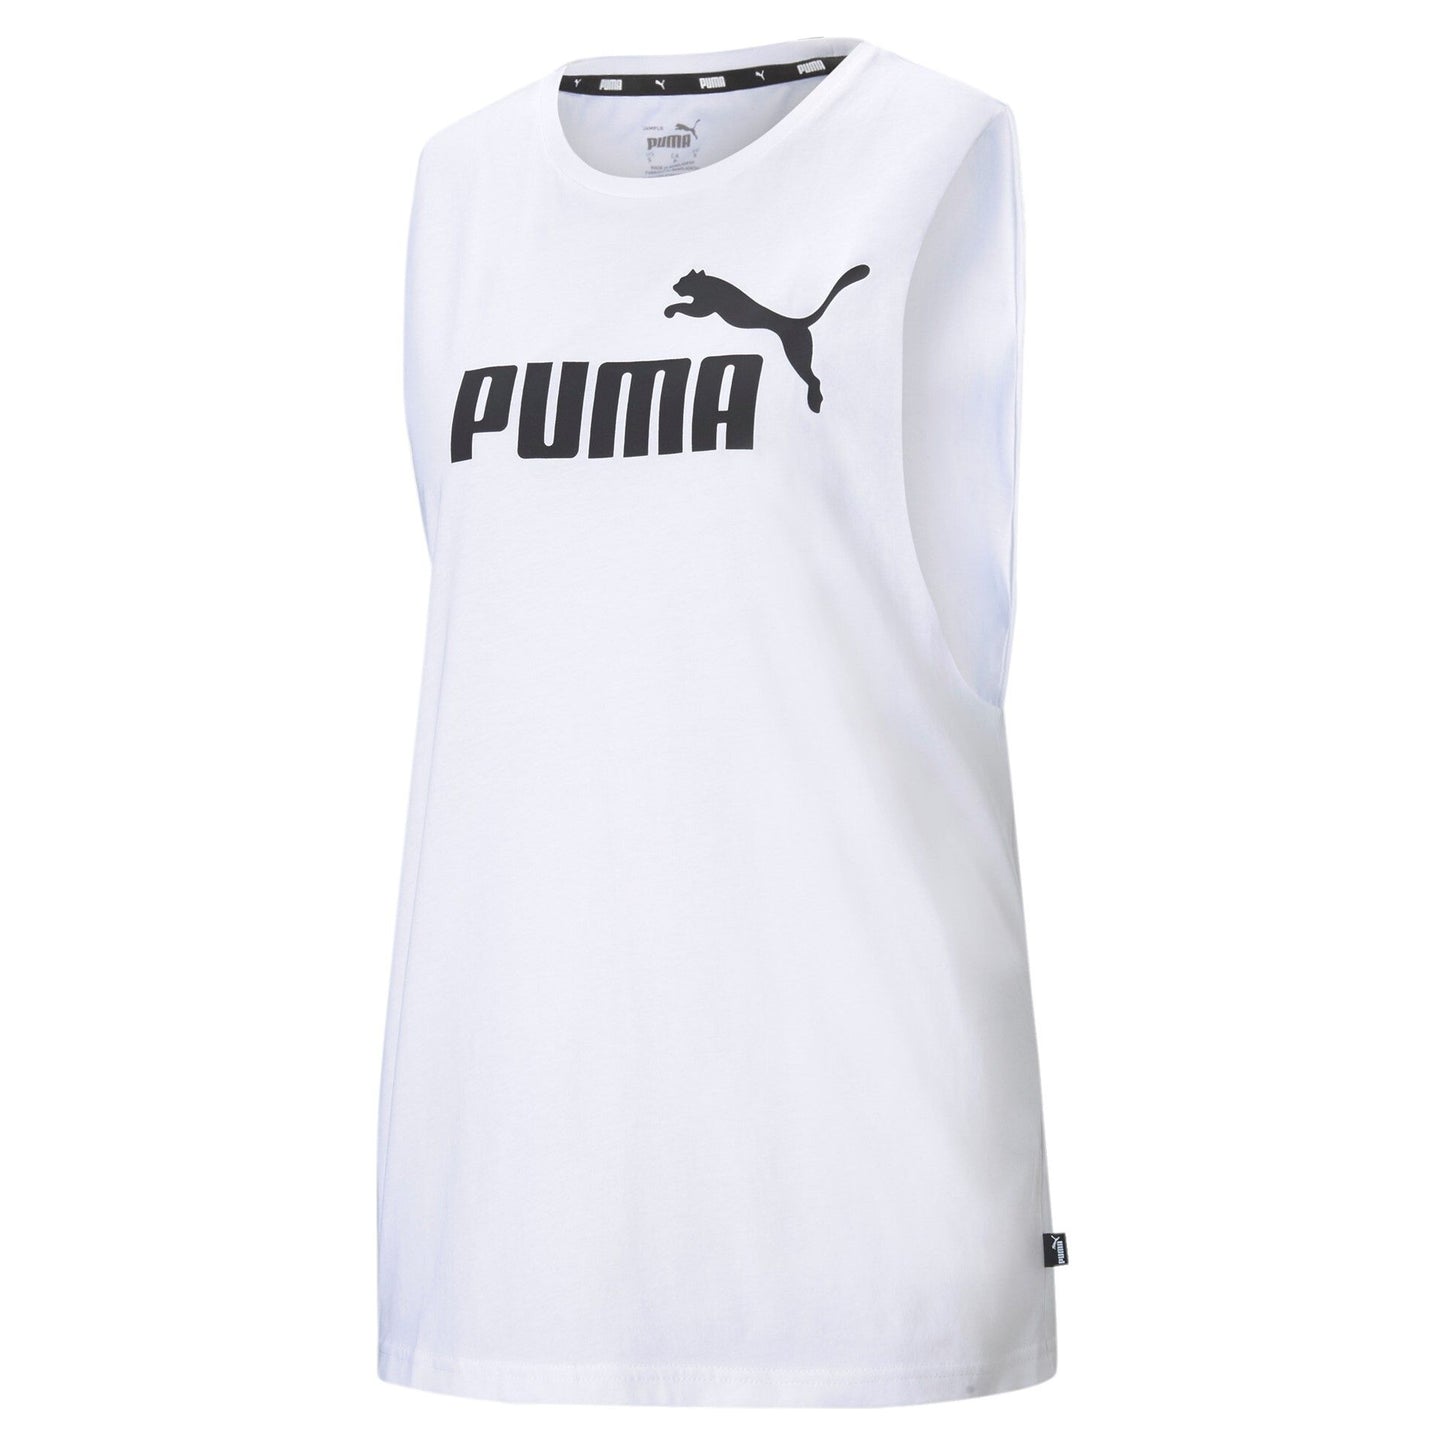 Camiseta tirantes mujer Puma ESS CUT OFF LOGO TANK blanco